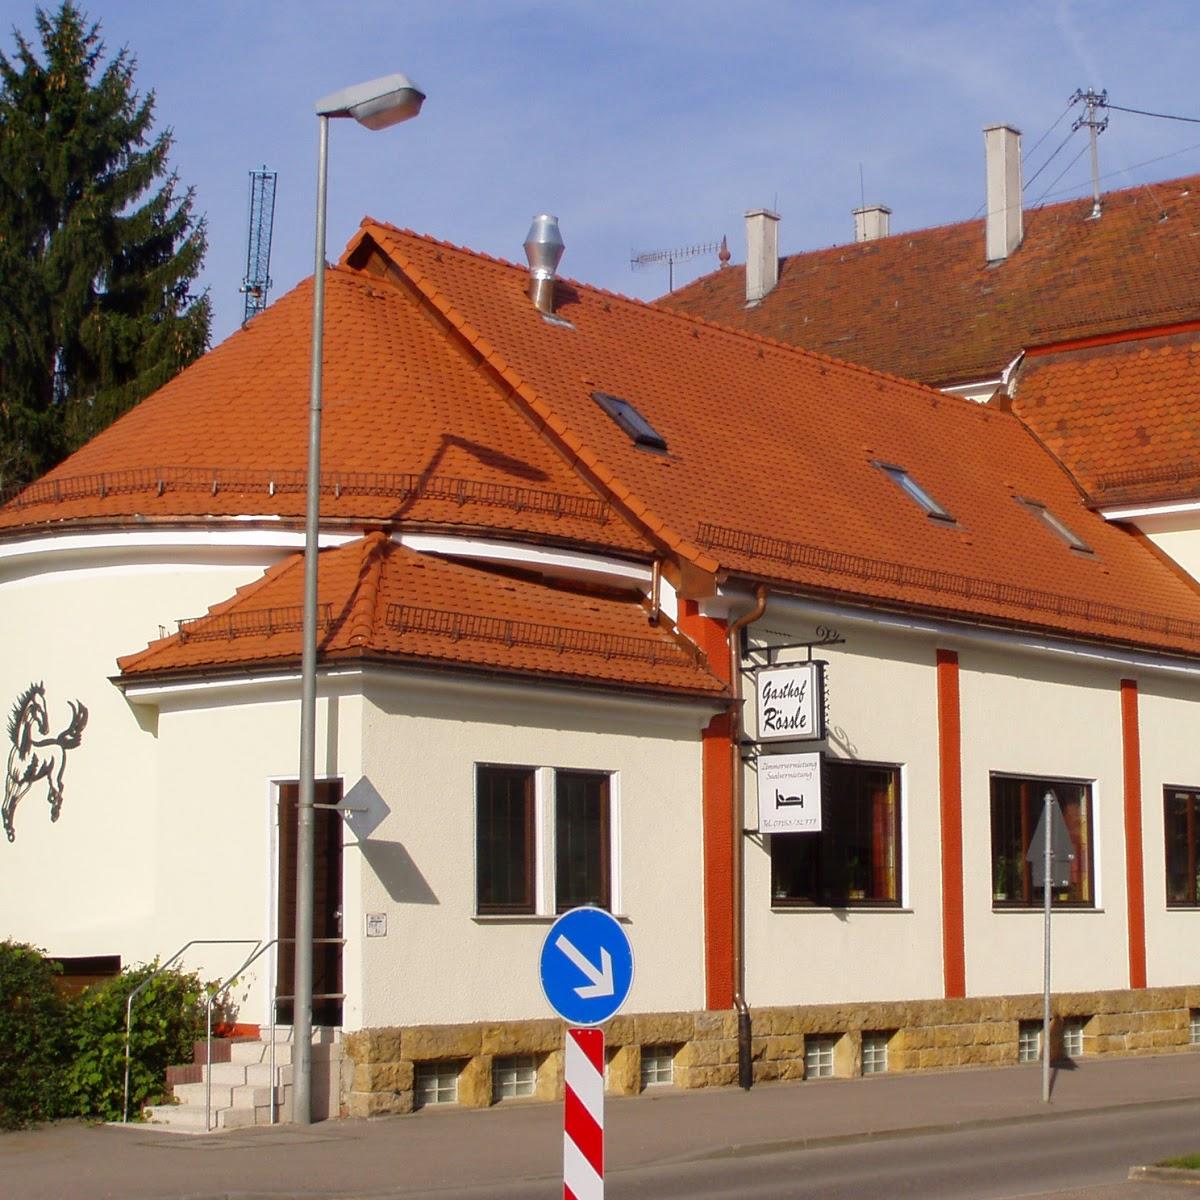 Restaurant "Pension Gasthof Rössle" in Wernau (Neckar)